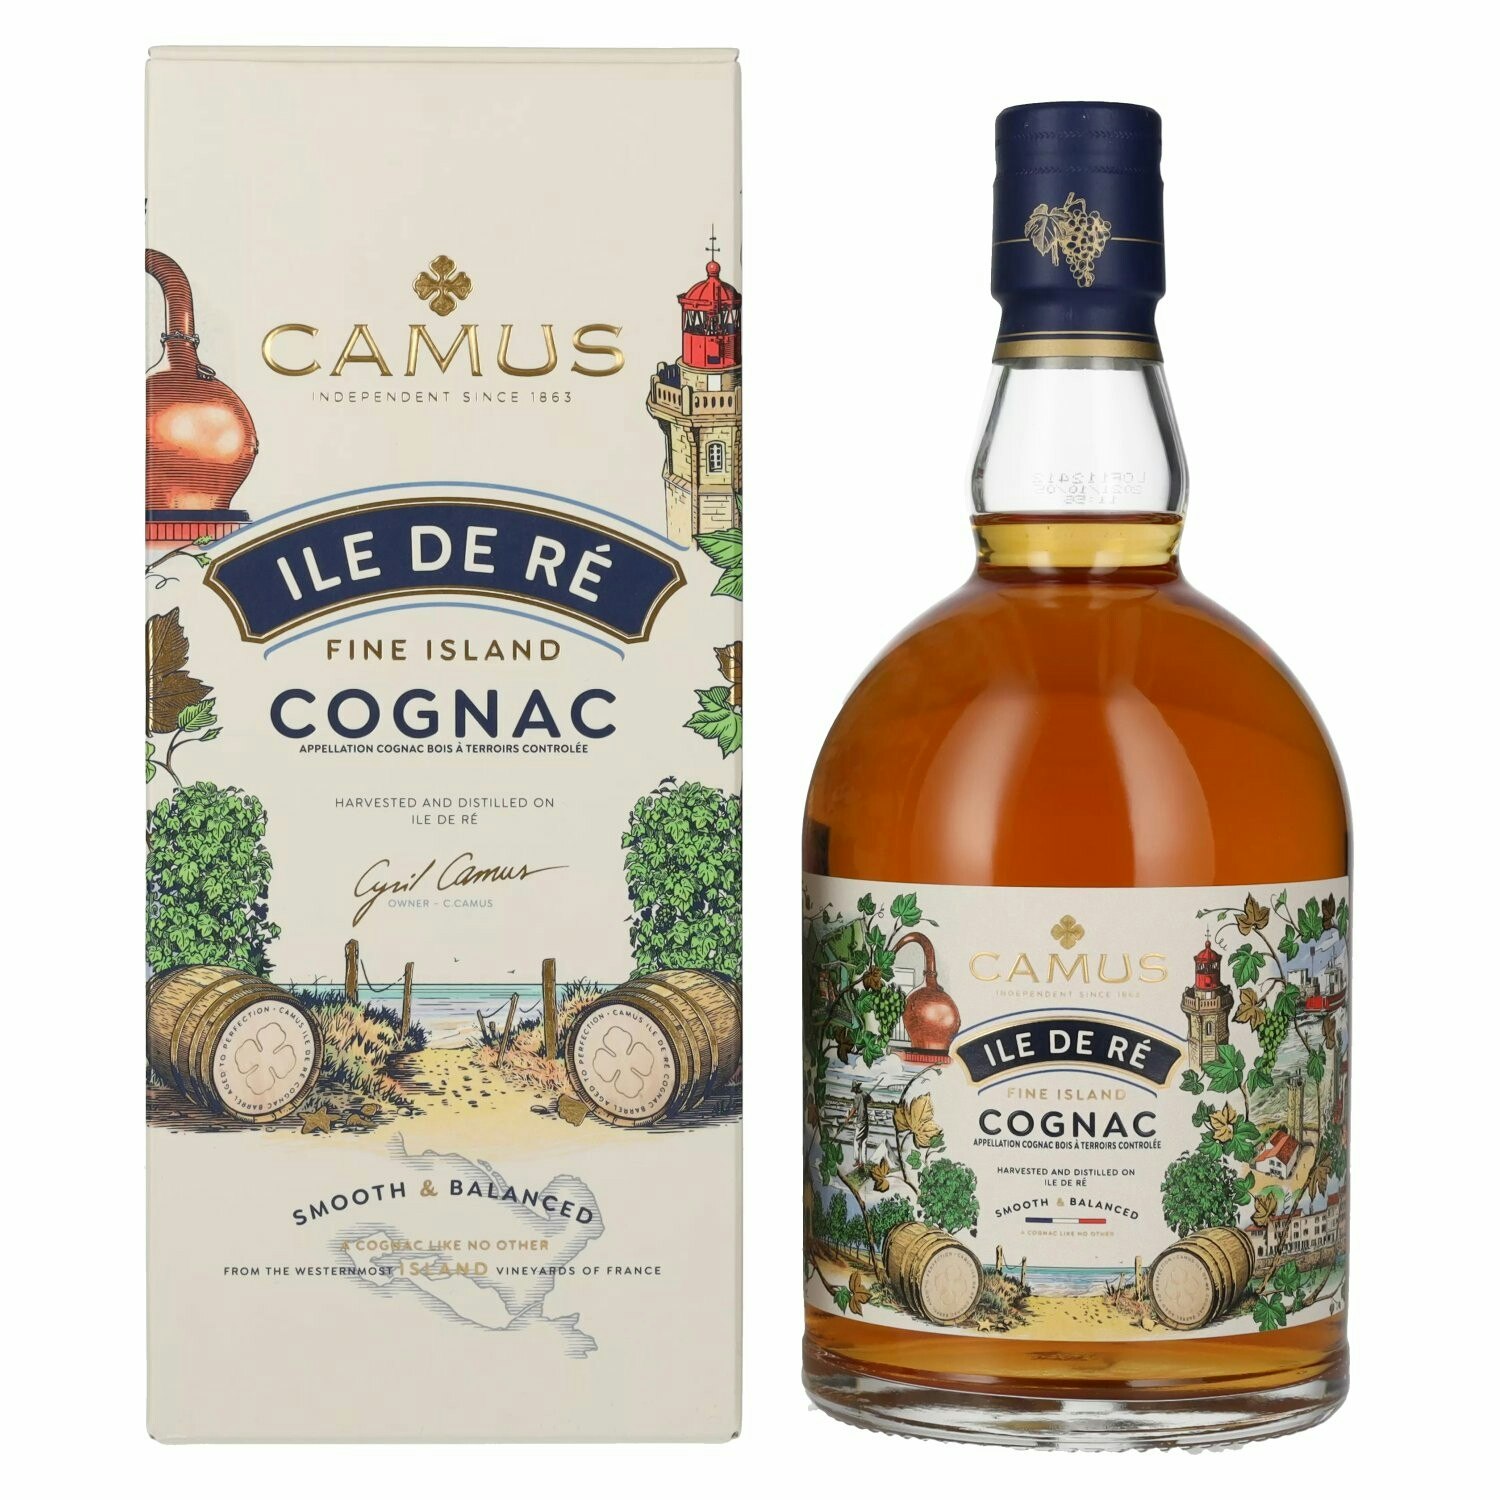 Camus ÎLE DE RÉ Fine Island Cognac 40% Vol. 0,7l in Giftbox